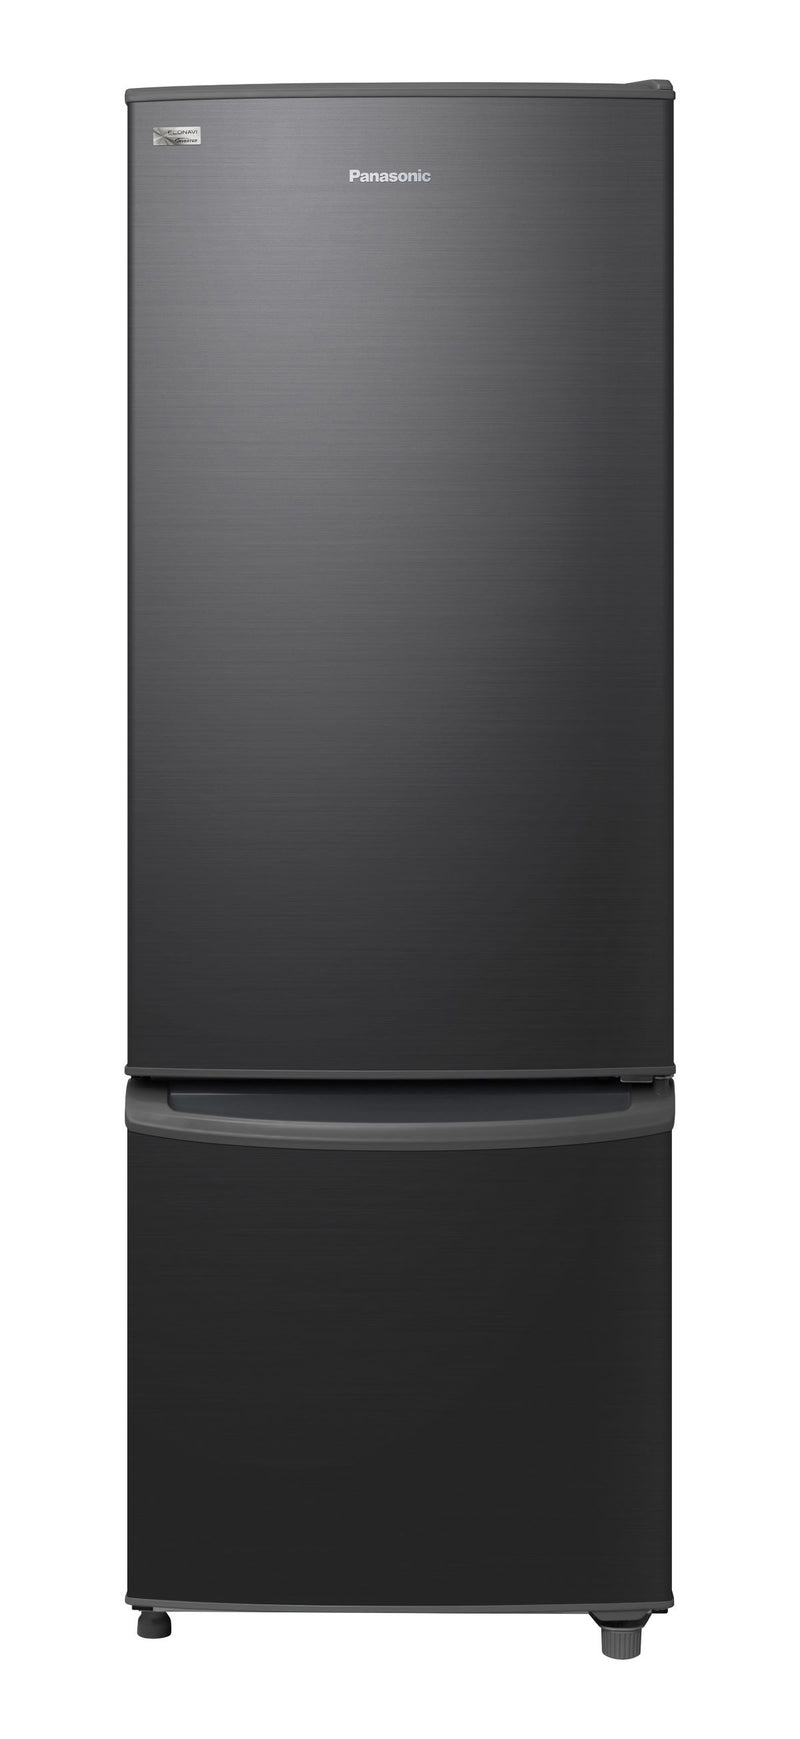 PANASONIC NRBT269RK ECONAVI 2-door Refrigerator (Metallic Dark Gray color) (includes unpacking and moving appliance service)